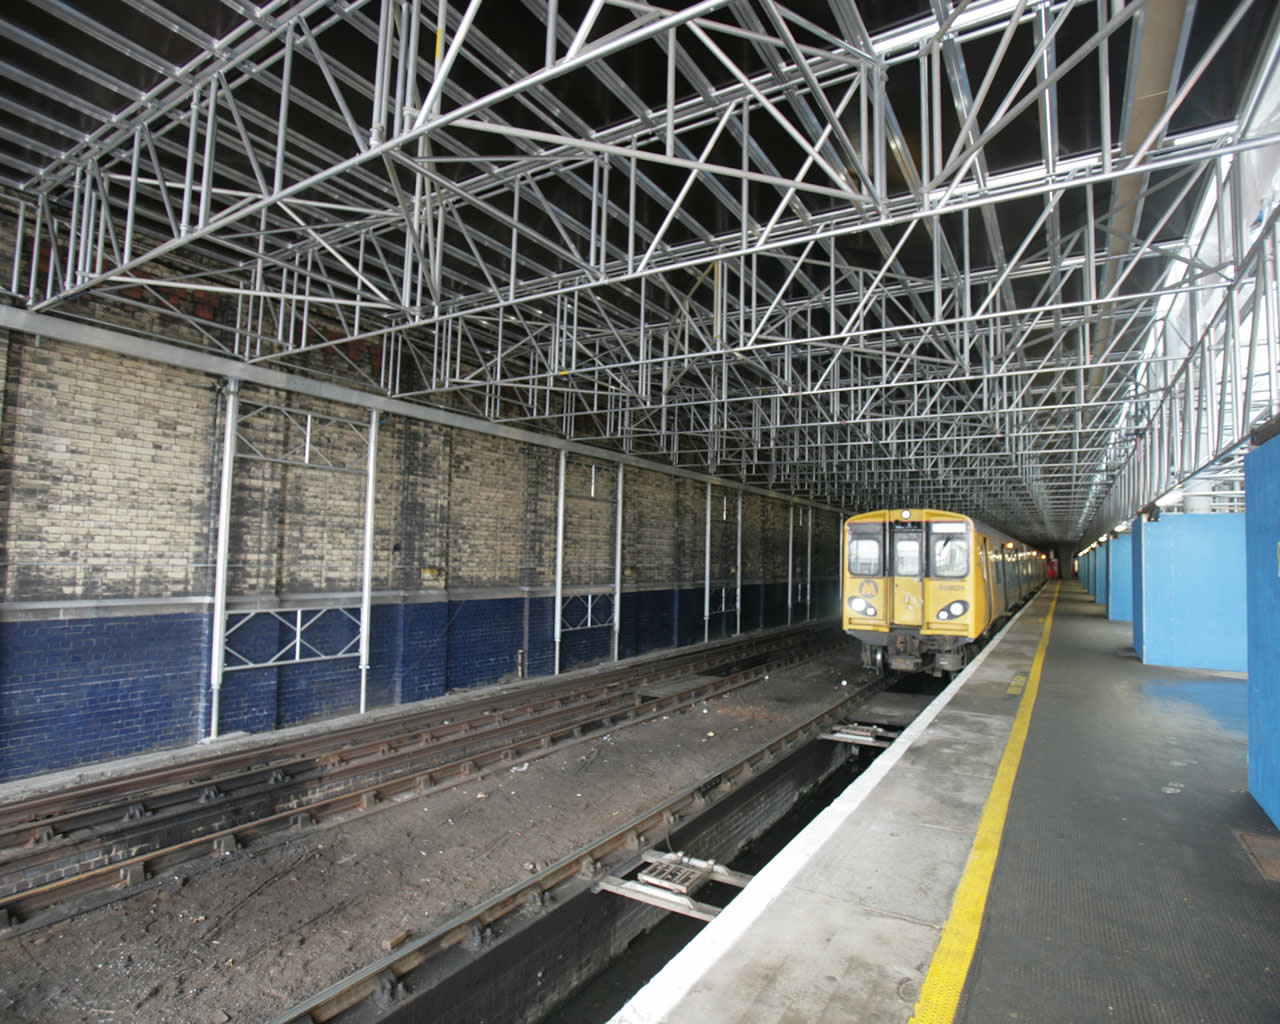 Southport Station